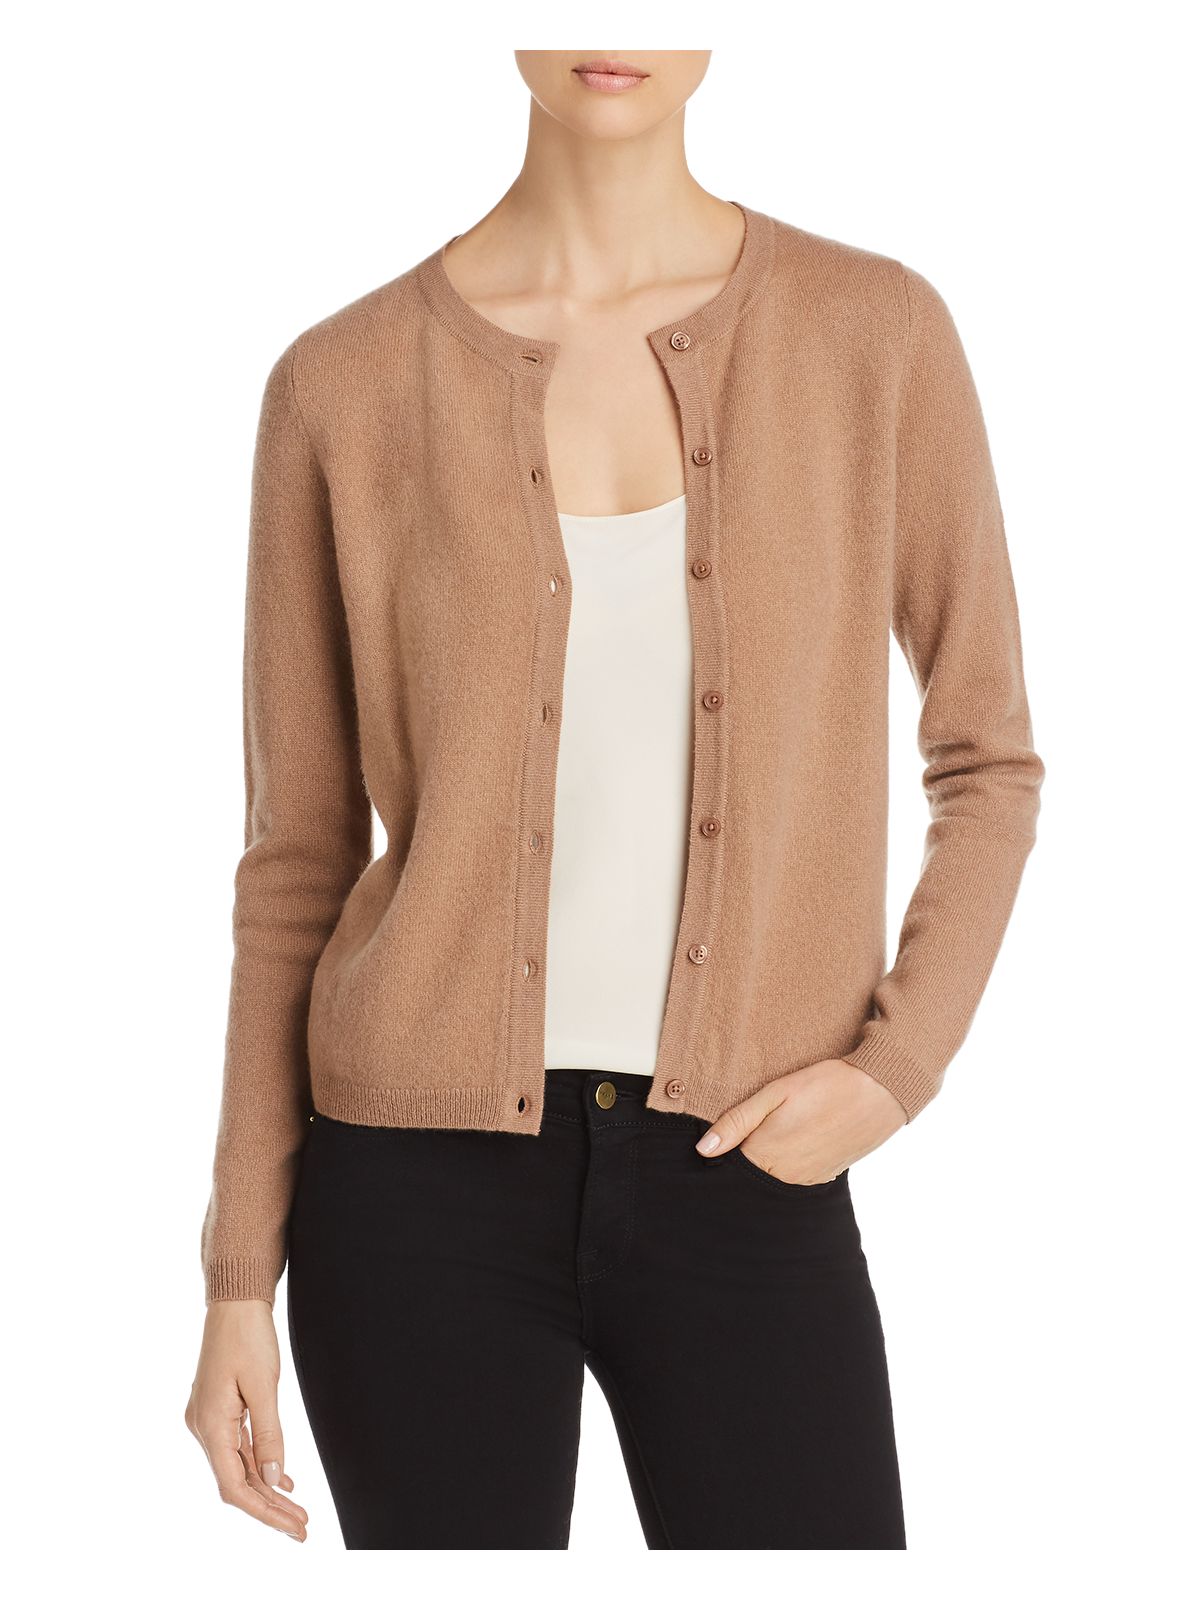 Designer Brand Womens Brown Long Sleeve Crew Neck Button Up Sweater M